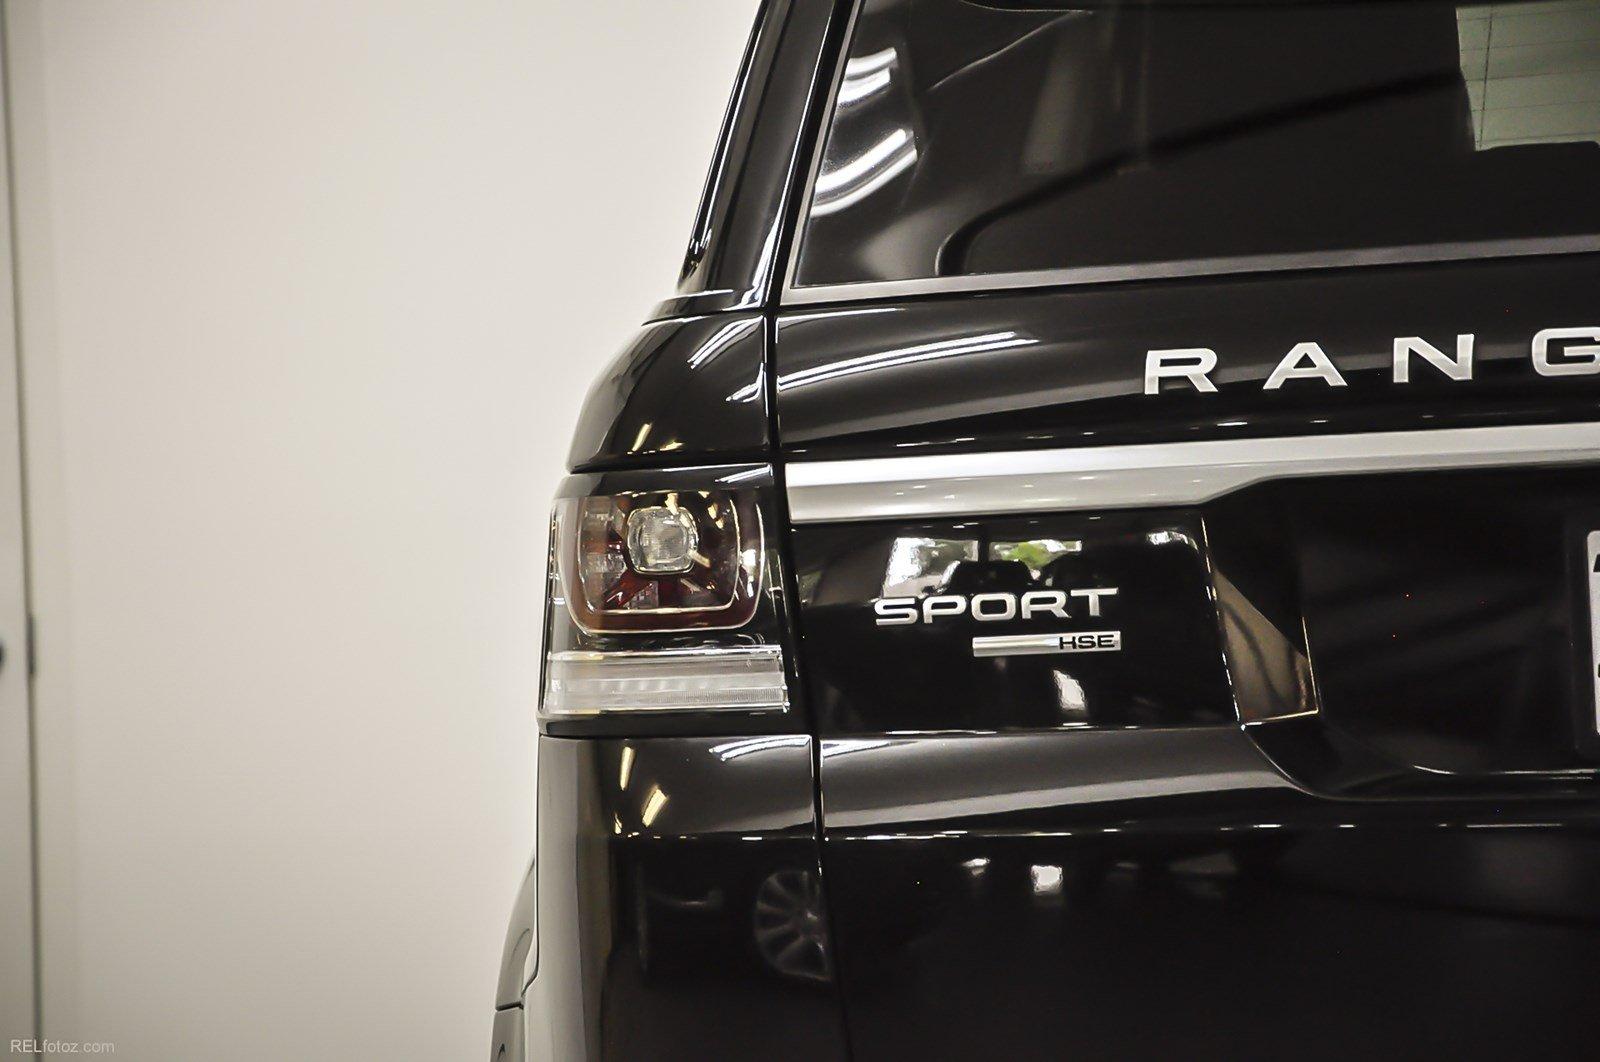 Used 2015 Land Rover Range Rover Sport HSE for sale Sold at Gravity Autos Marietta in Marietta GA 30060 6